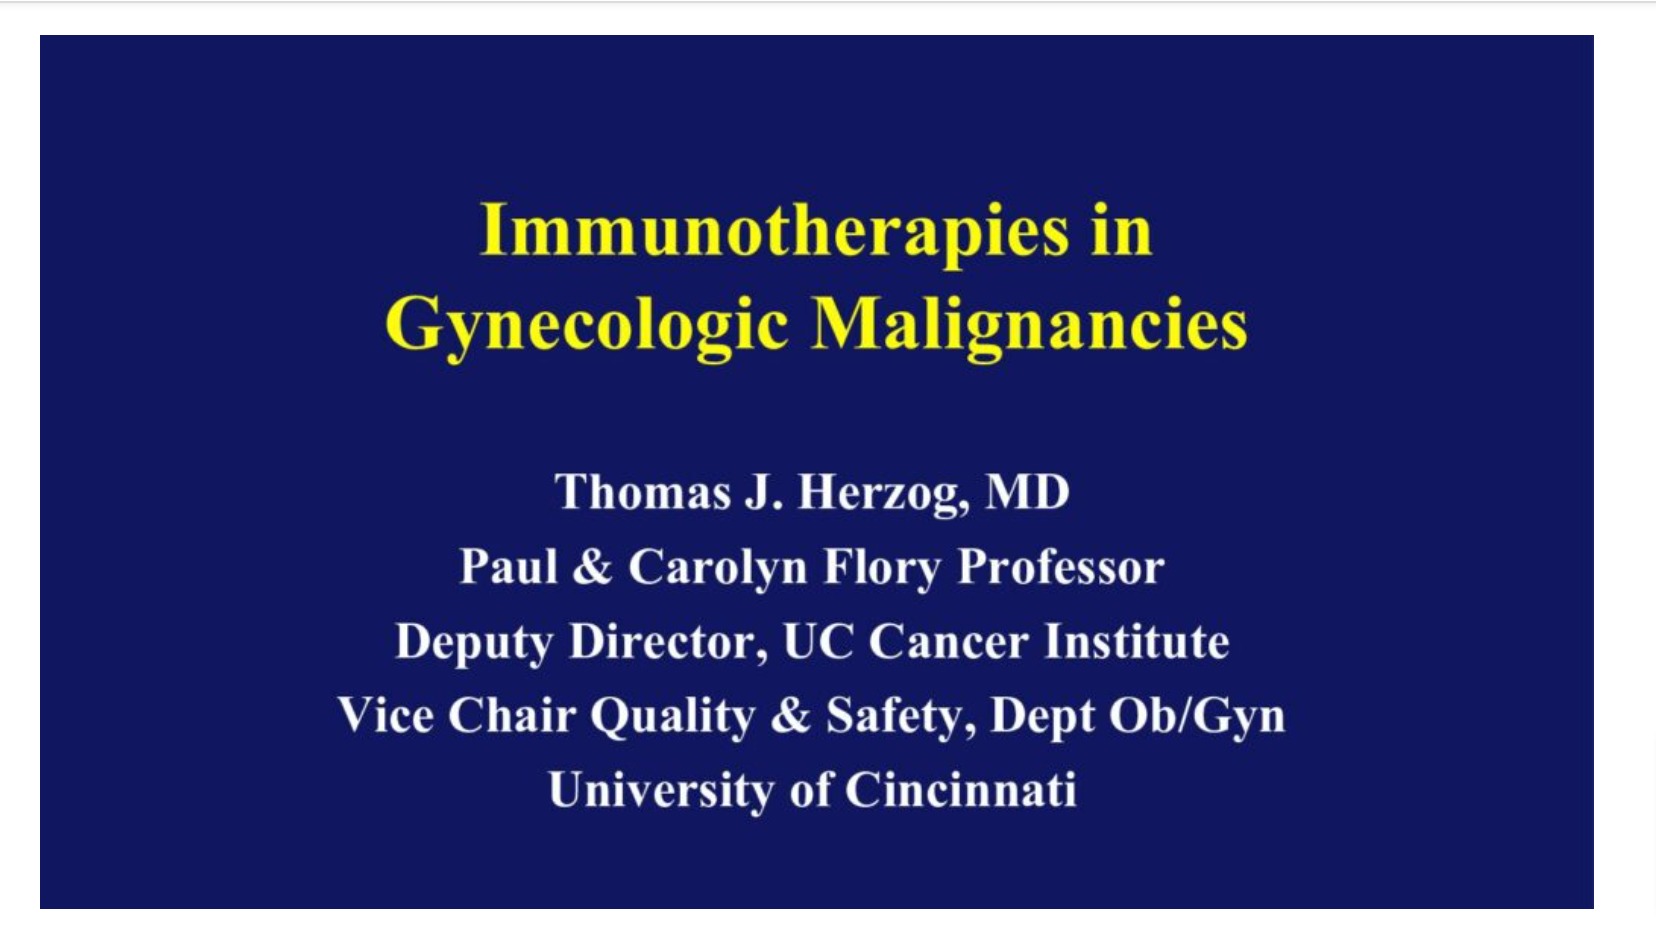 Immunotherapy in Gynecologic Malignancies